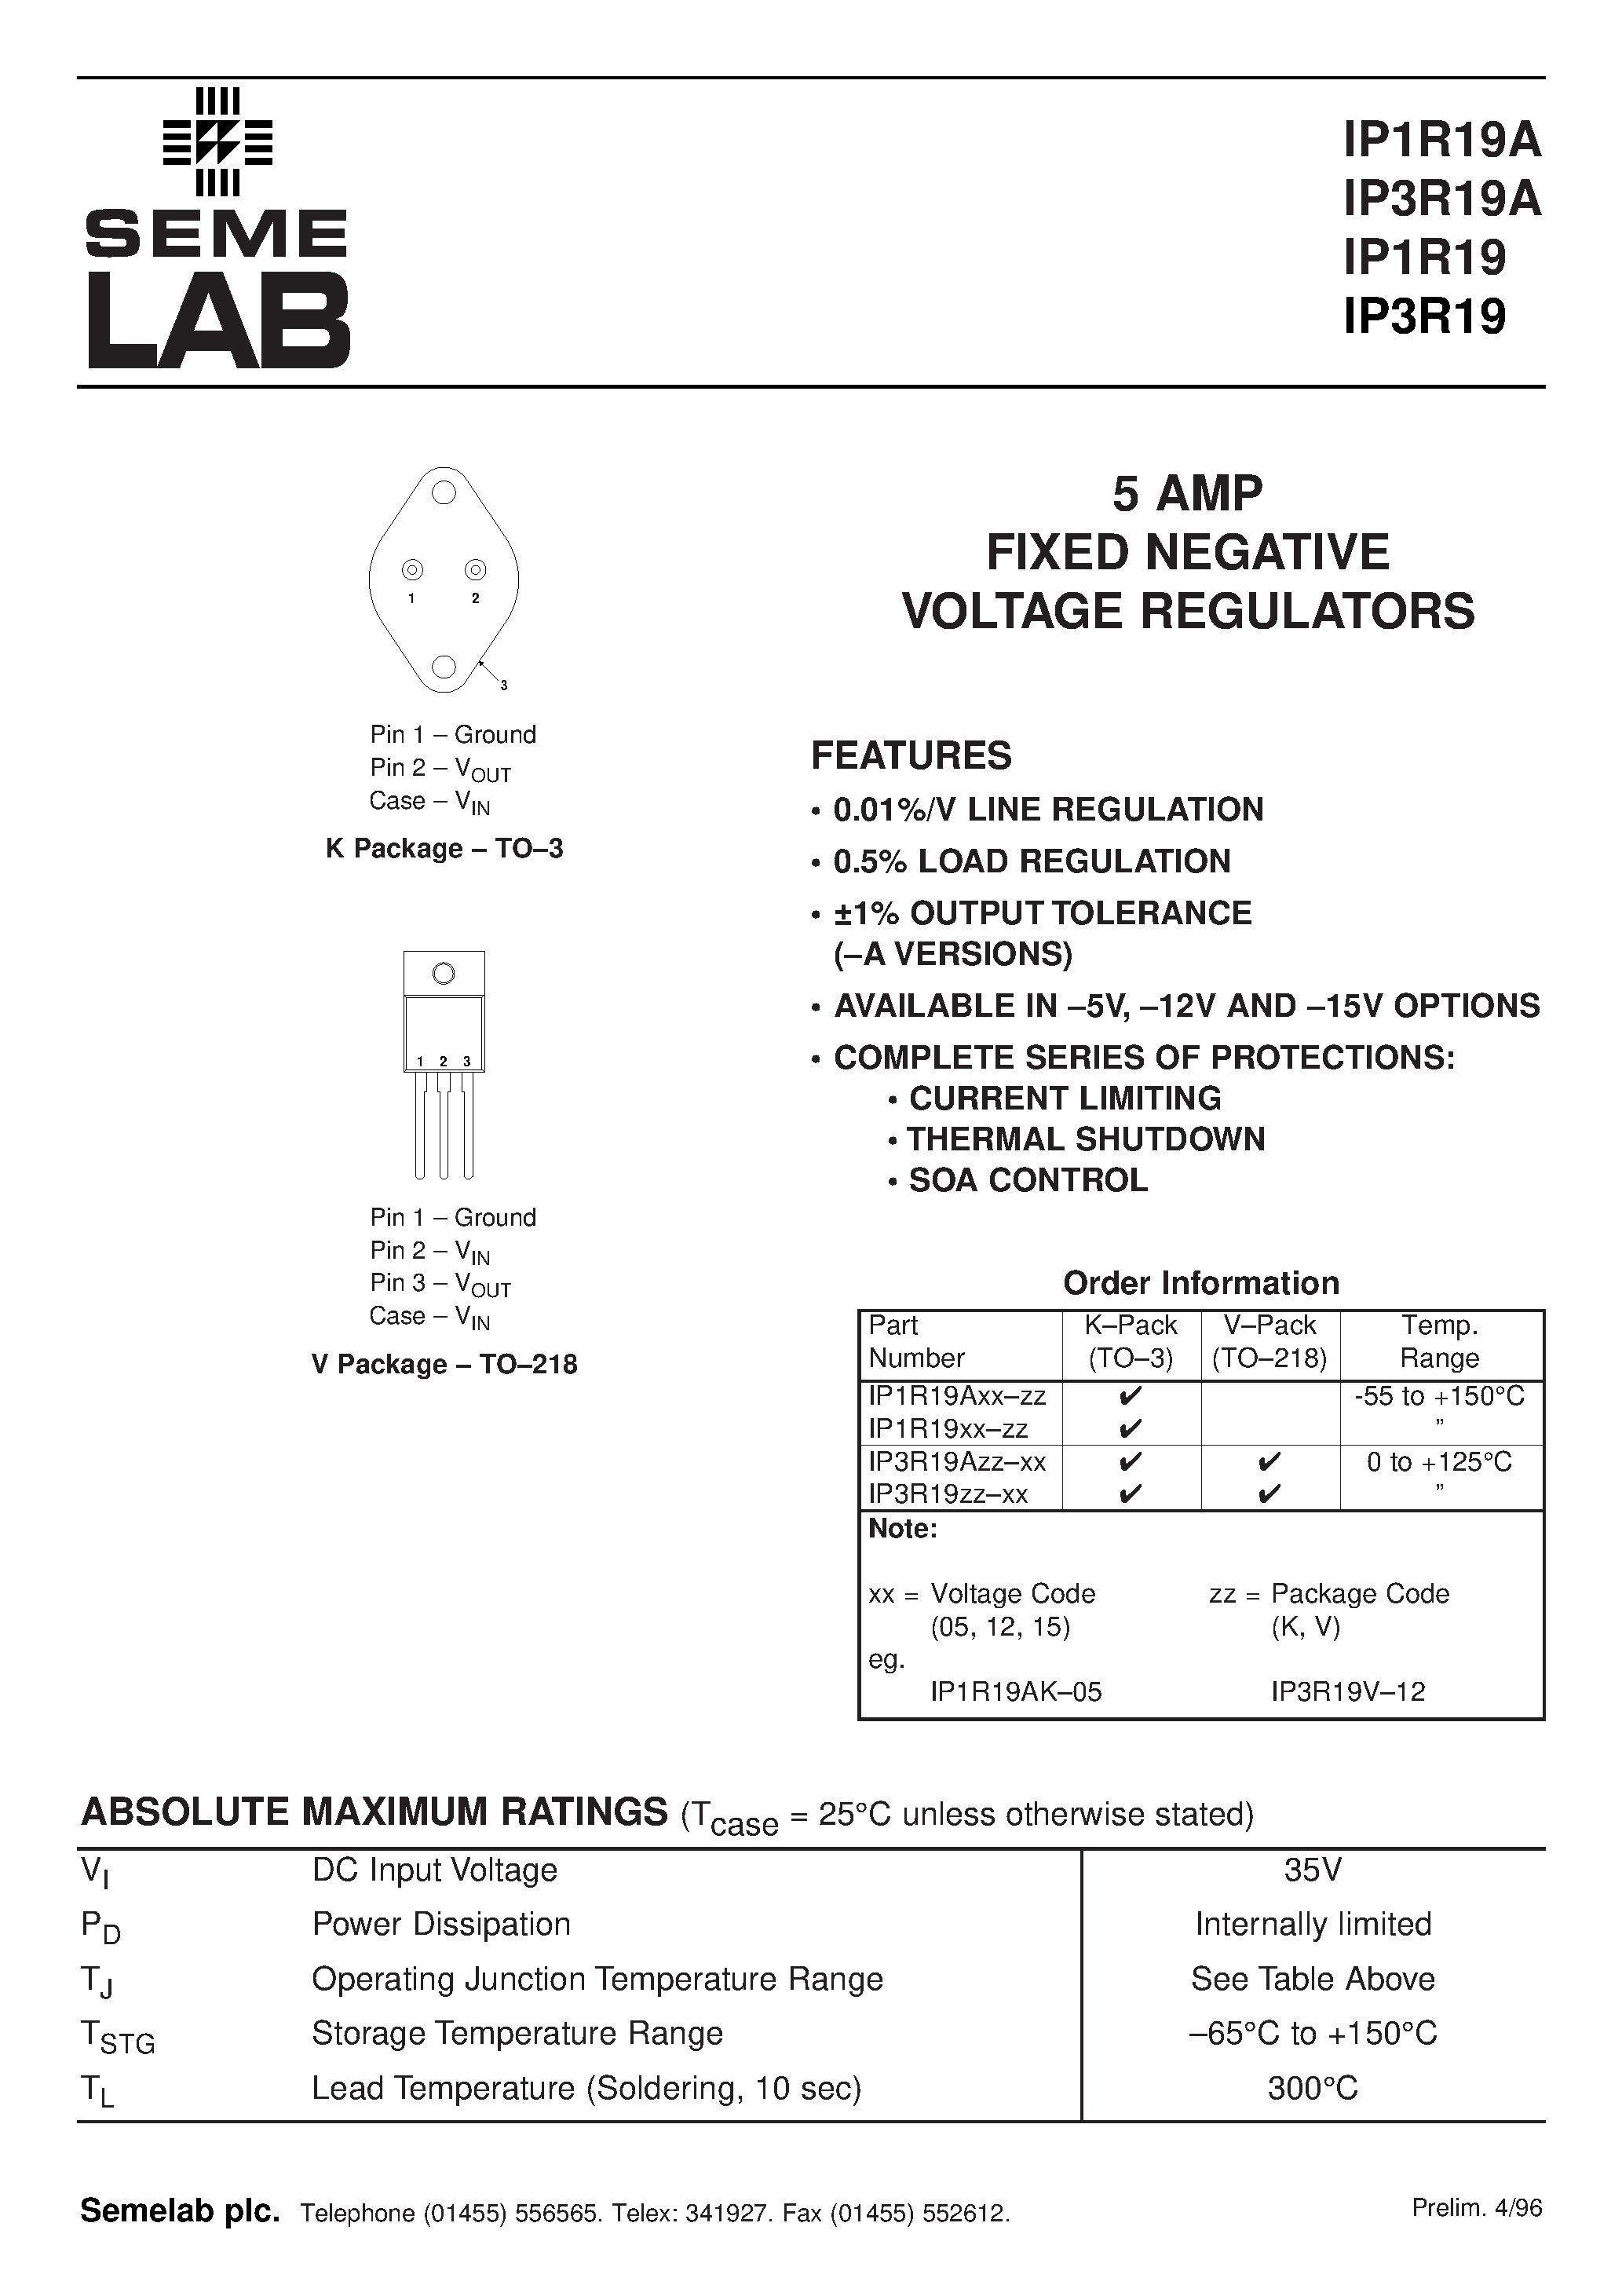 Datasheet IP1R1905-V - 5 AMP FIXED NEGATIVE VOLTAGE REGULATORS page 1